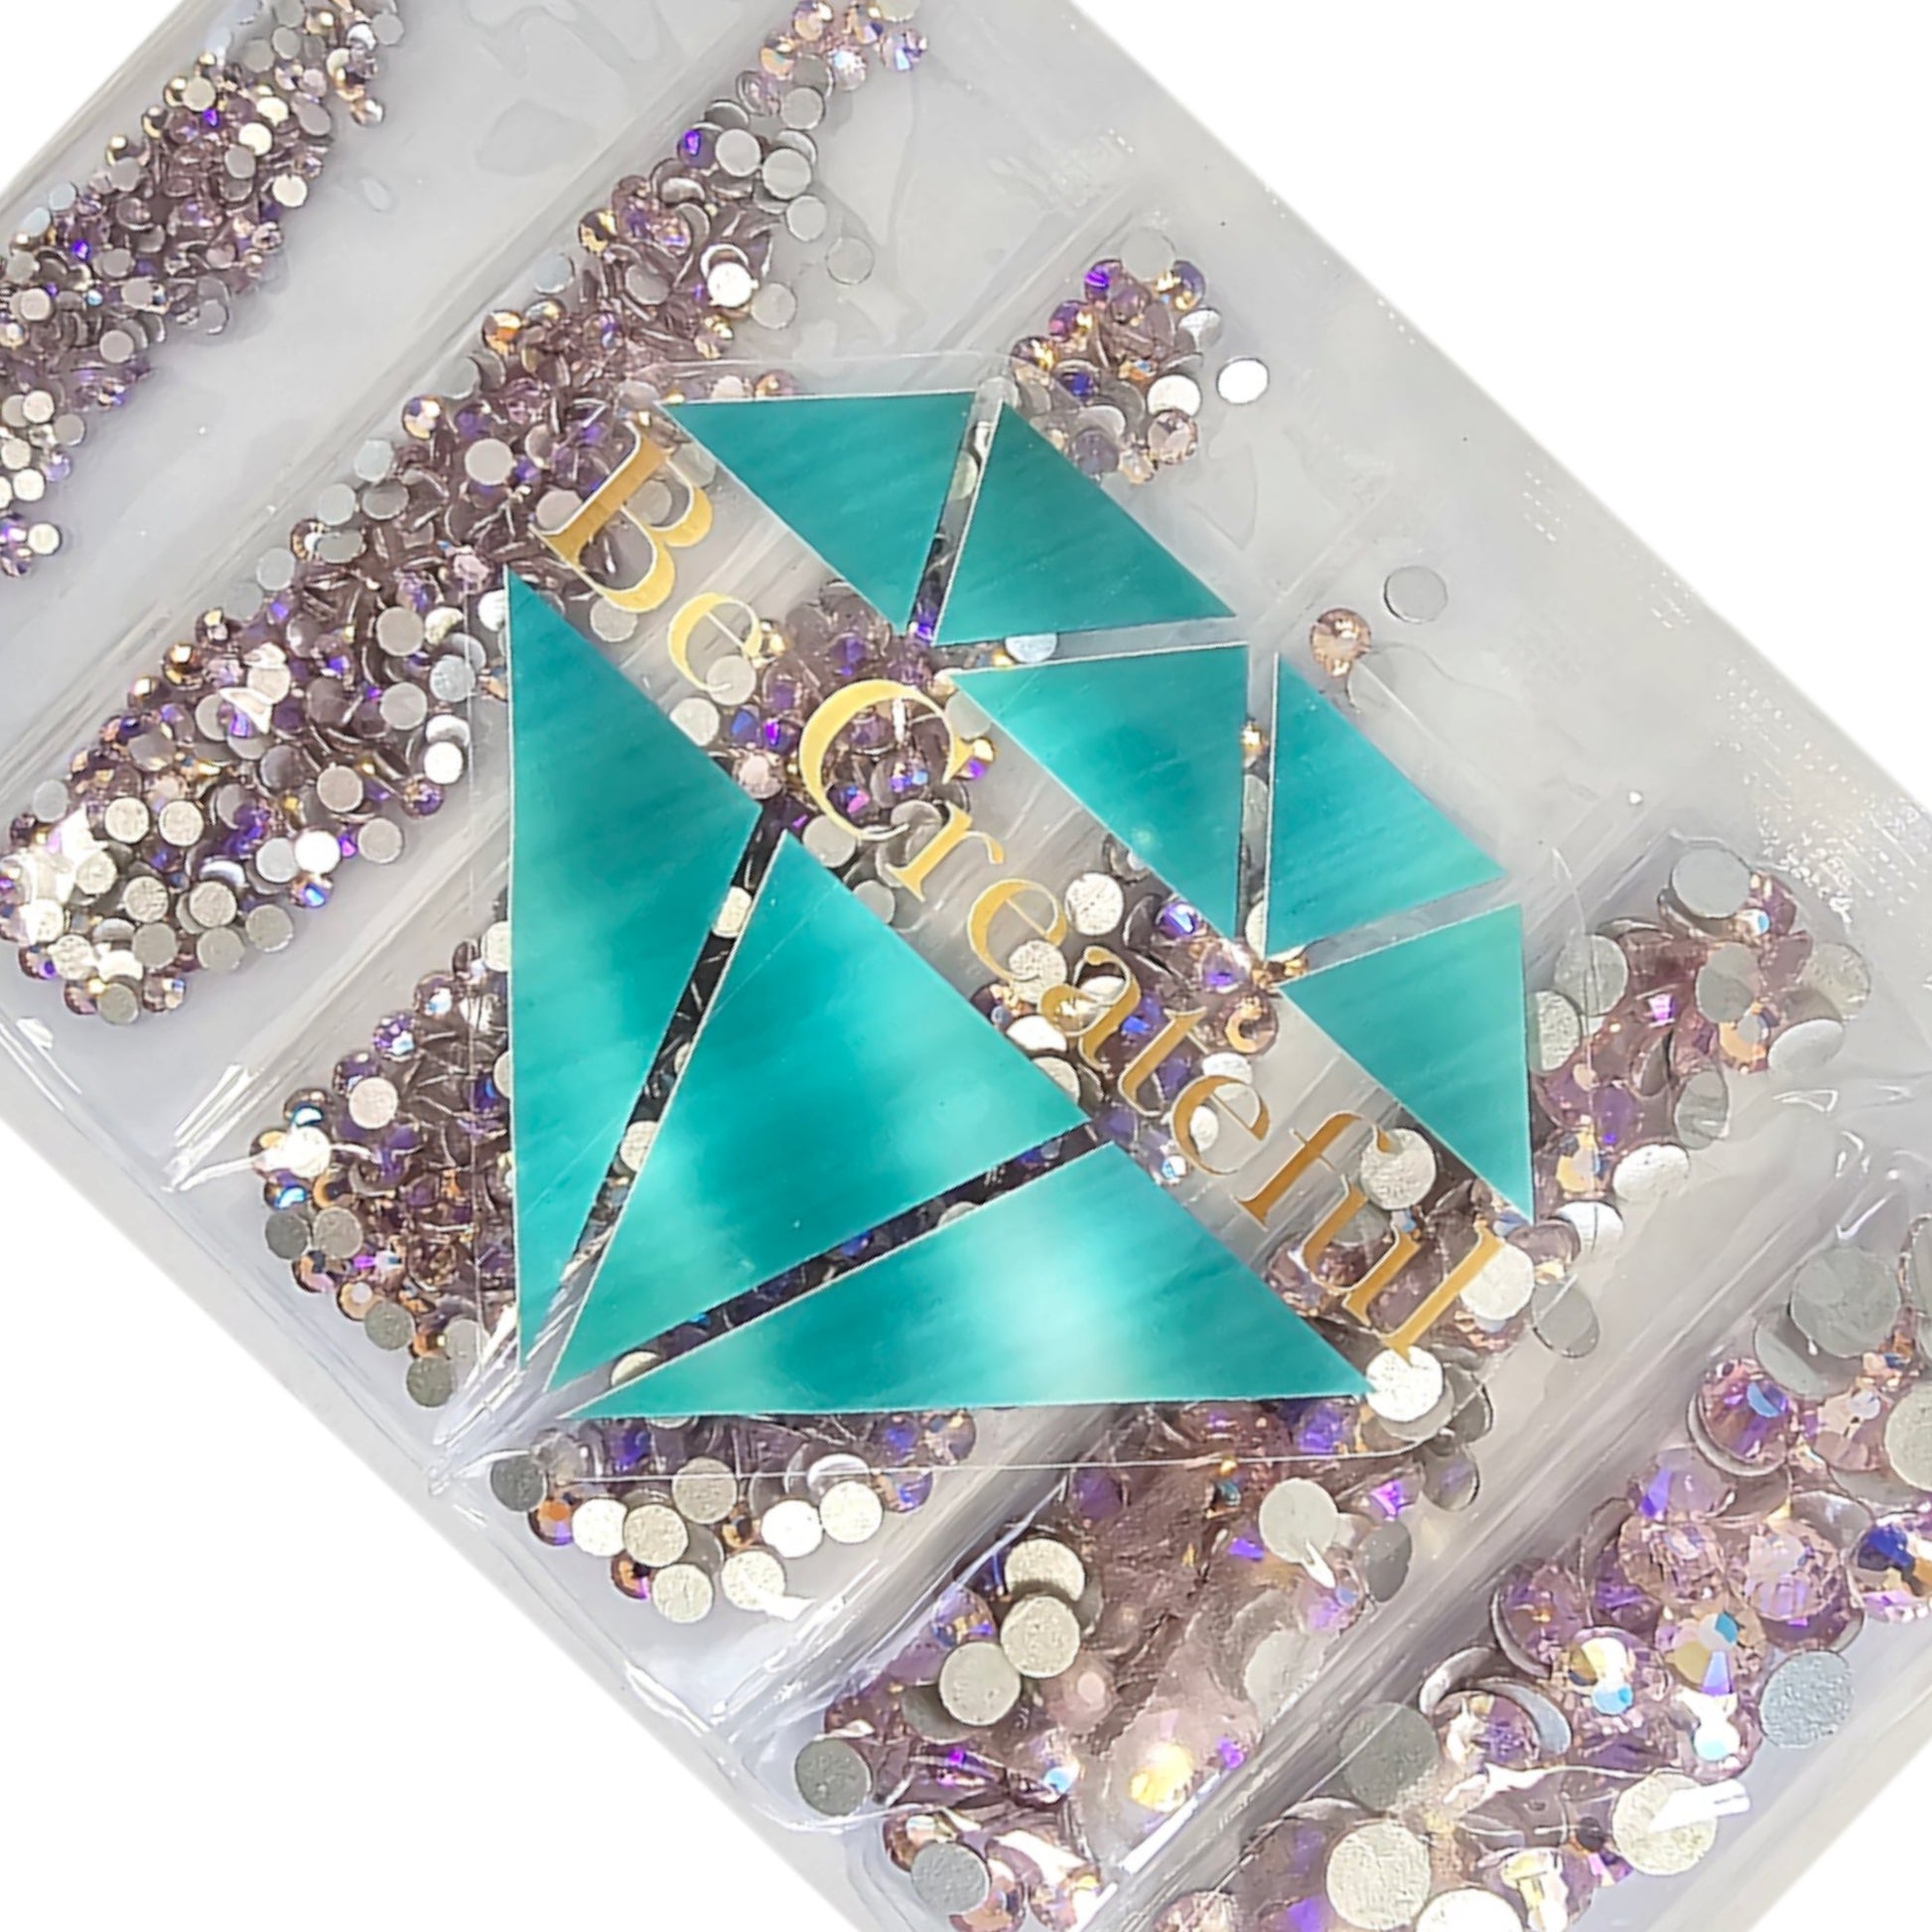 Be Createful - Flatback Foil Crystal AB Glass Rhinestones